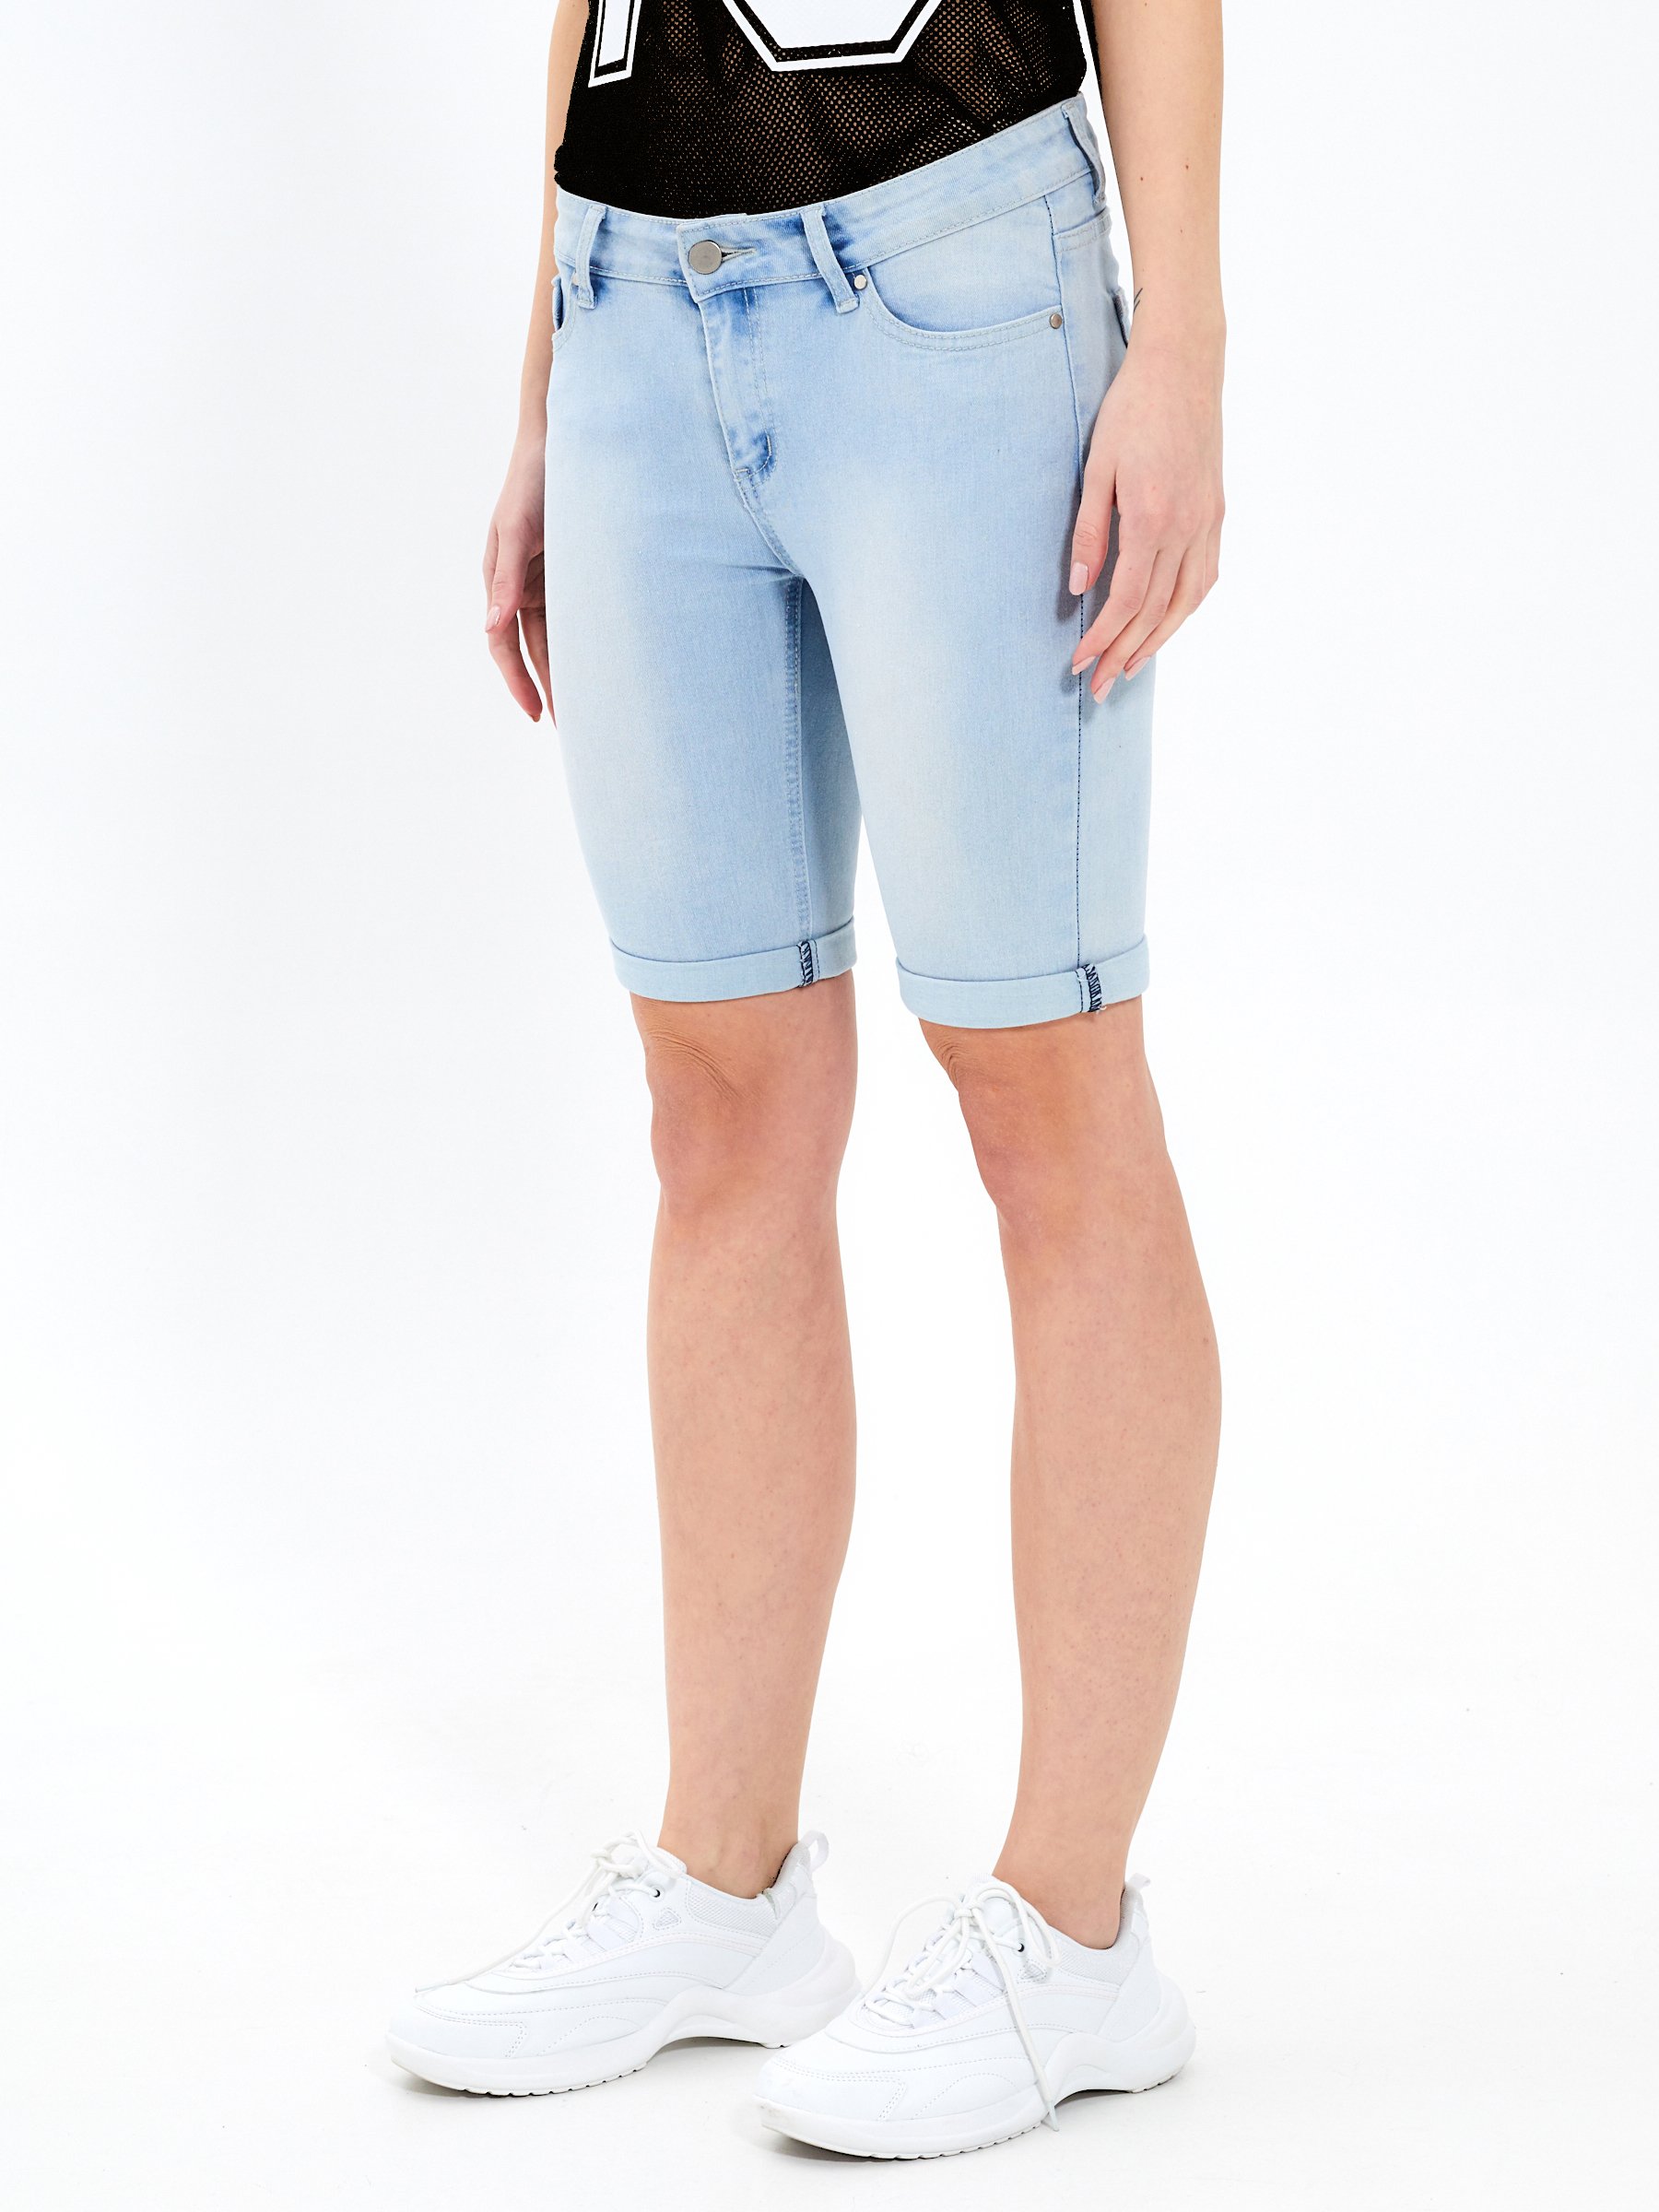 discount 90% Mango shorts jeans Blue 34                  EU WOMEN FASHION Jeans Basic 